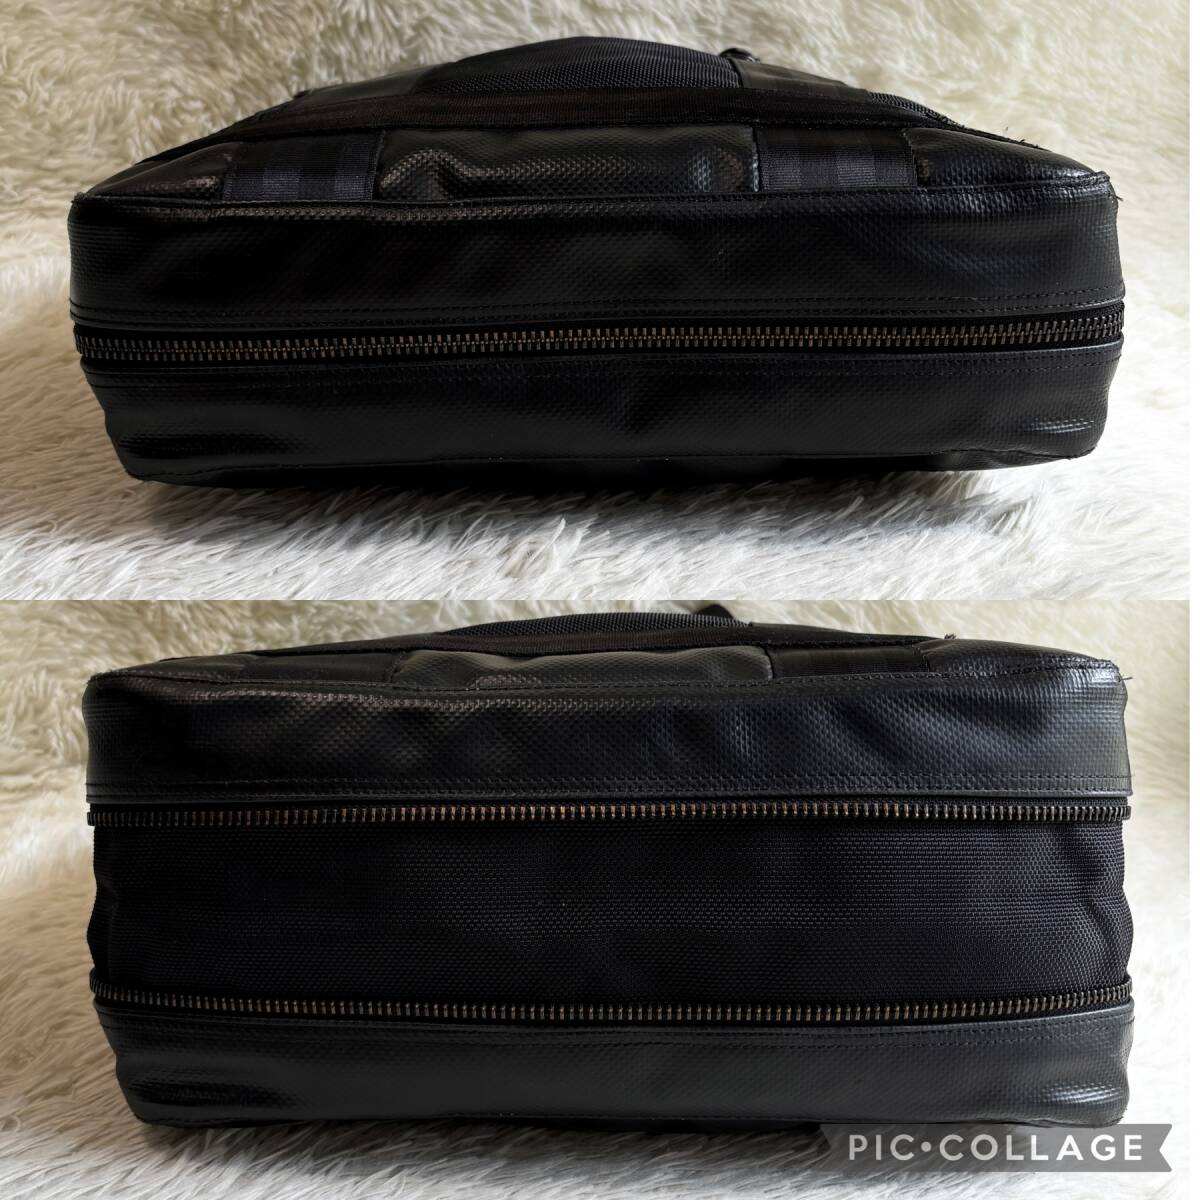 1 jpy ~ PORTER HEAT tote bag business bag shoulder .. shoulder bag Porter heat men's black black Yoshida bag commuting * going to school *